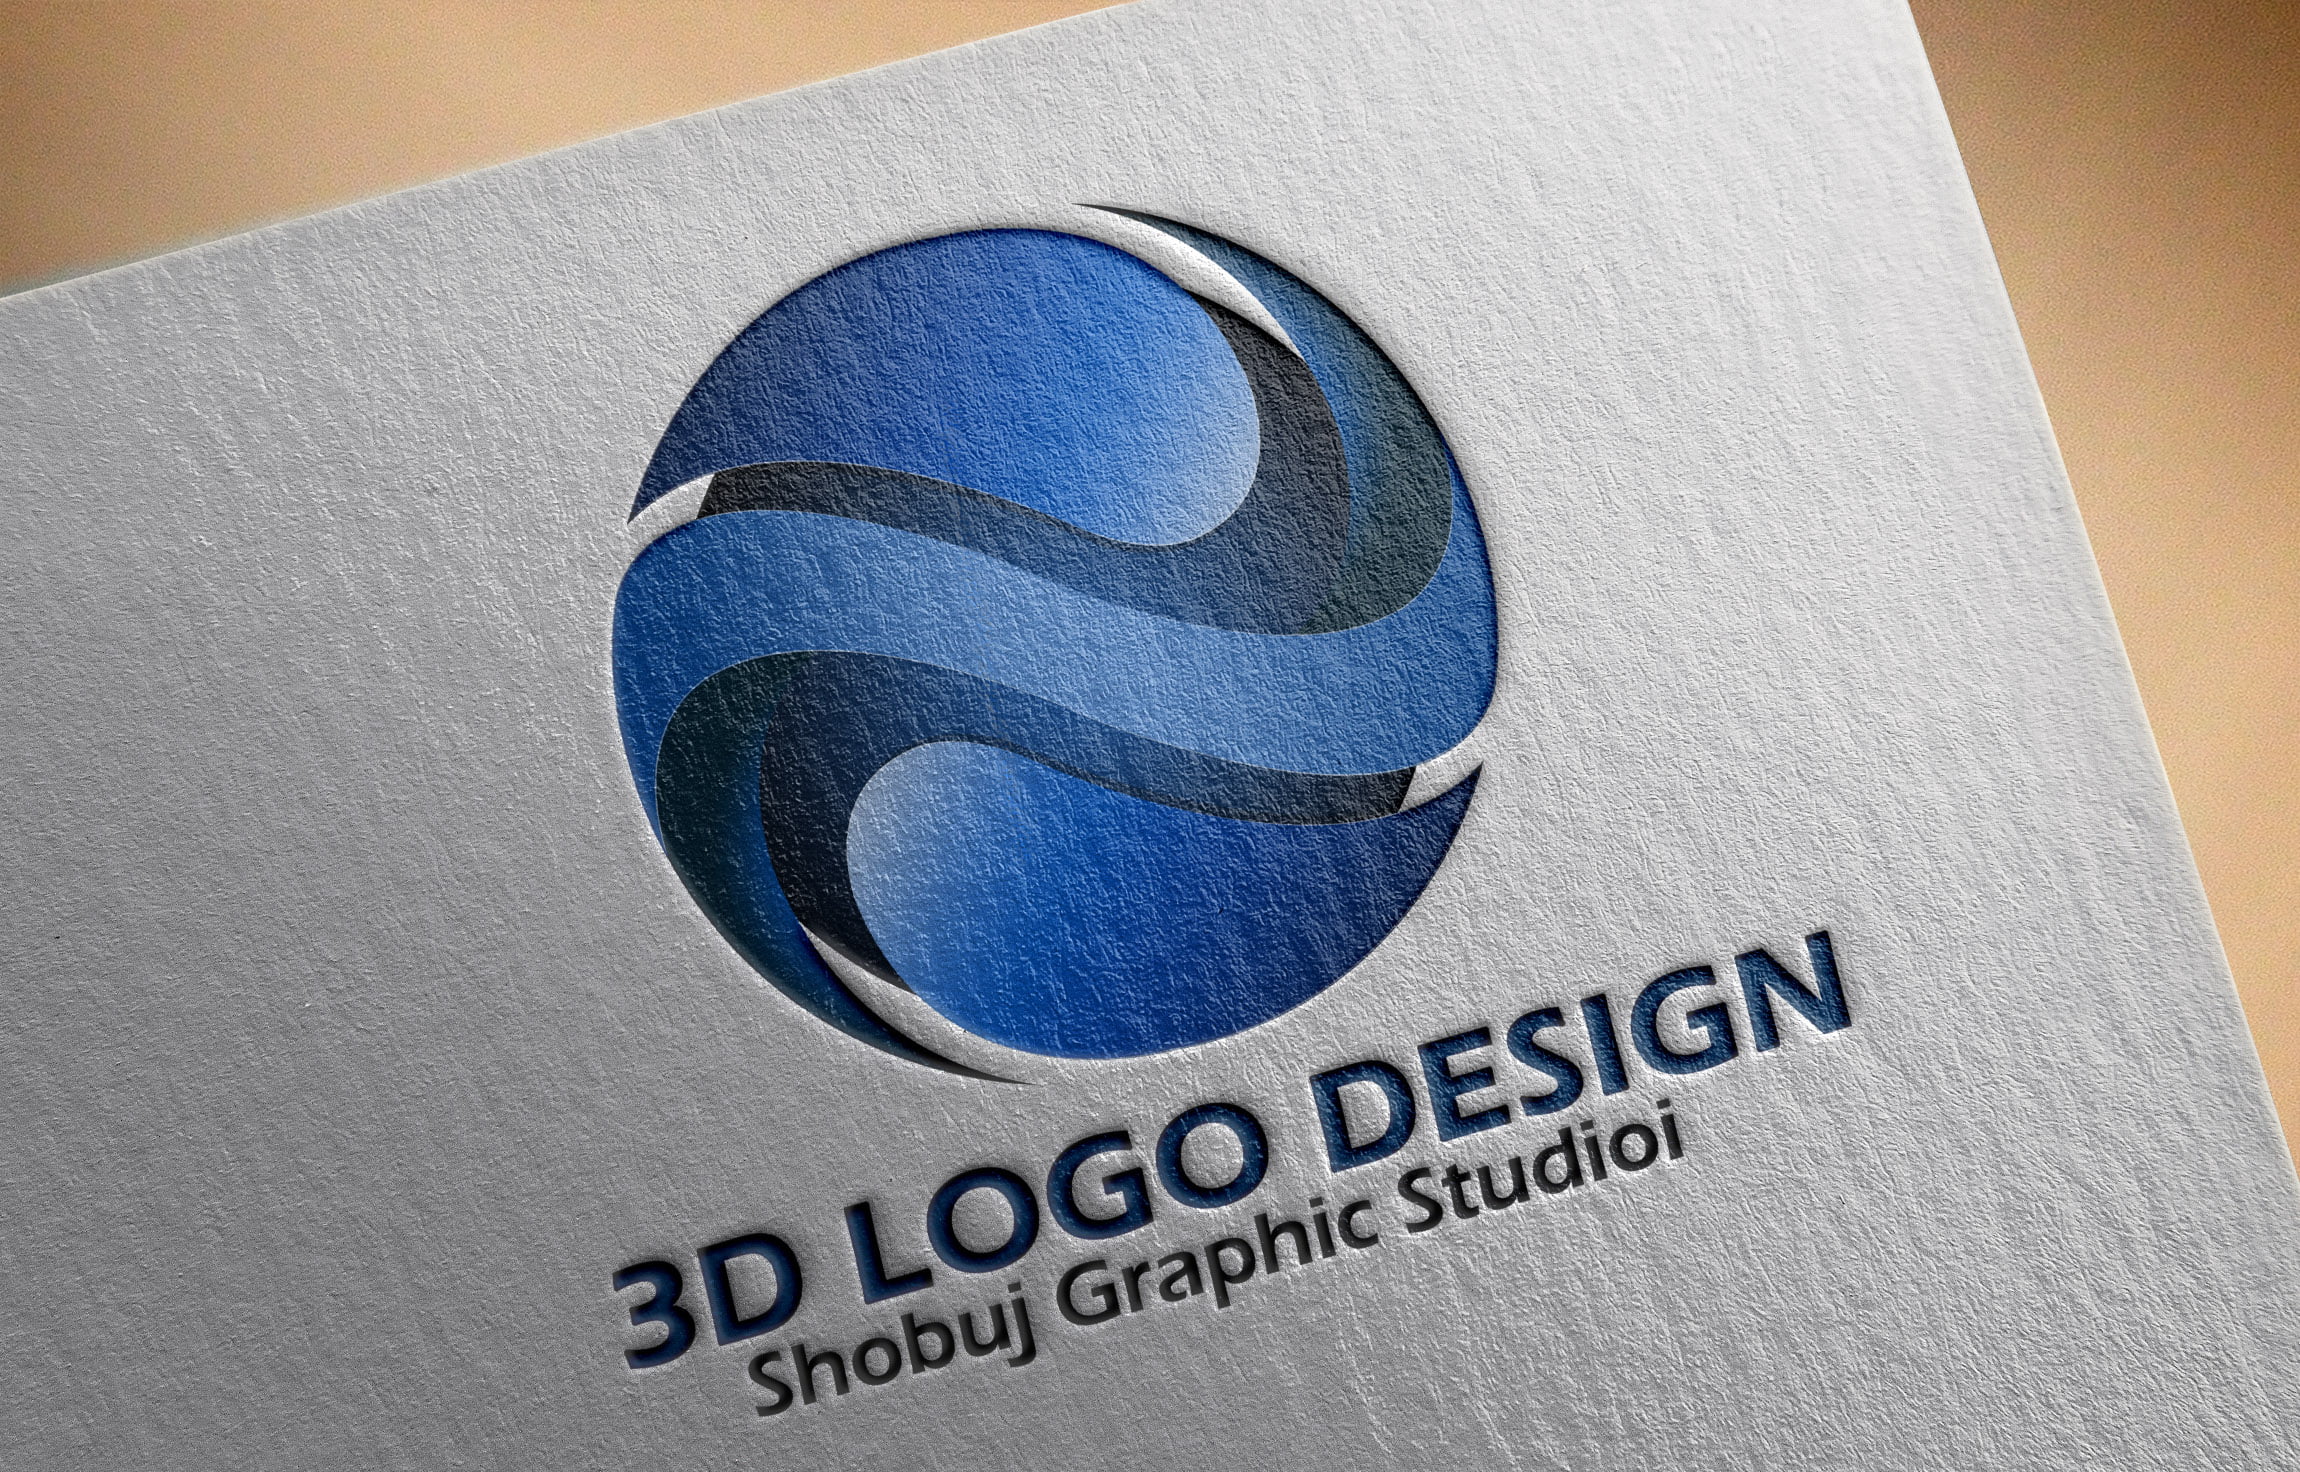 Free online 3d logo design - hillklo